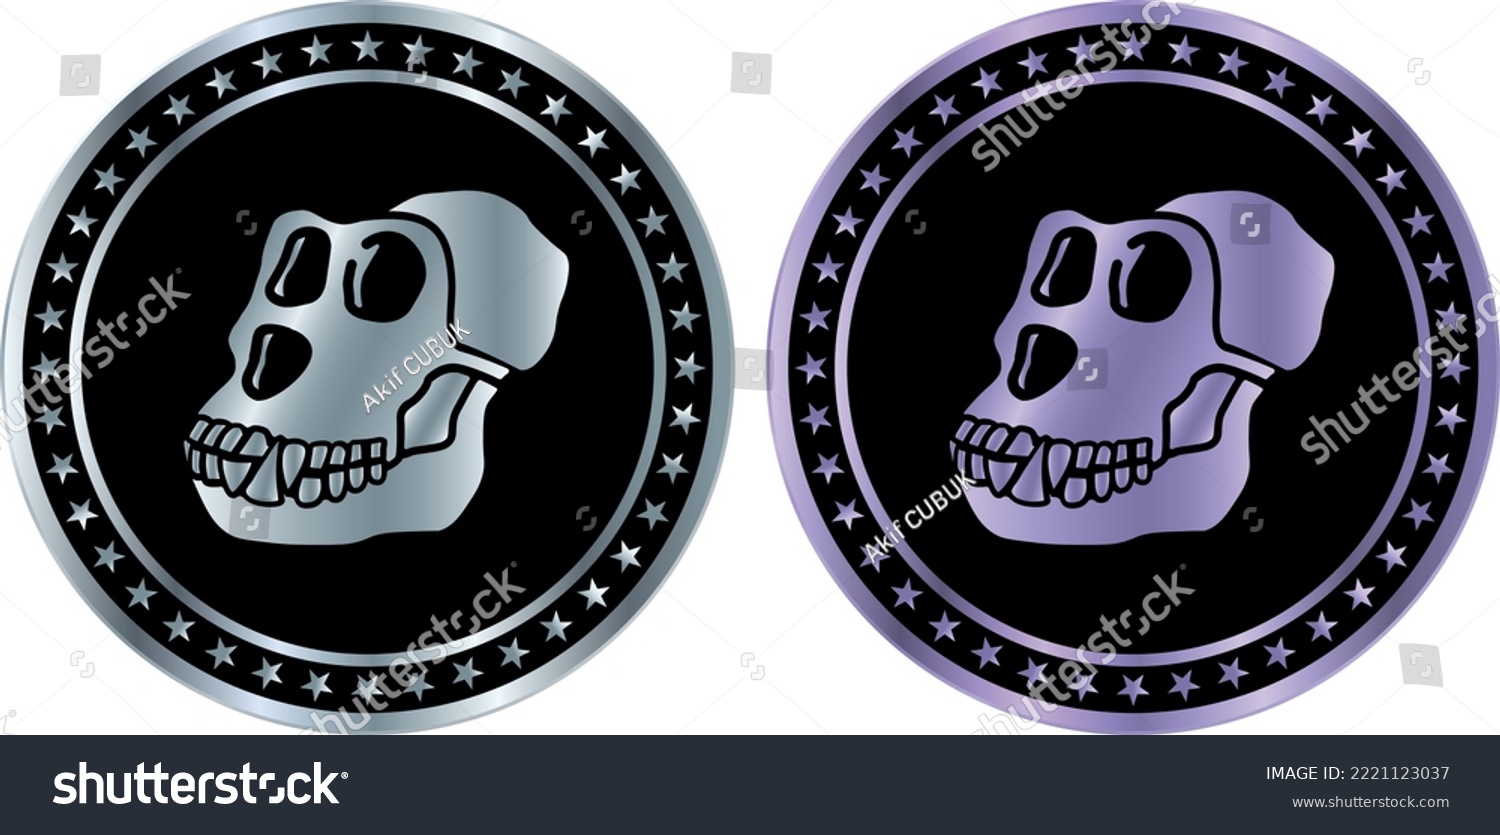 SVG of ape coin vector illustrations. 3d illustration. vector coins. svg